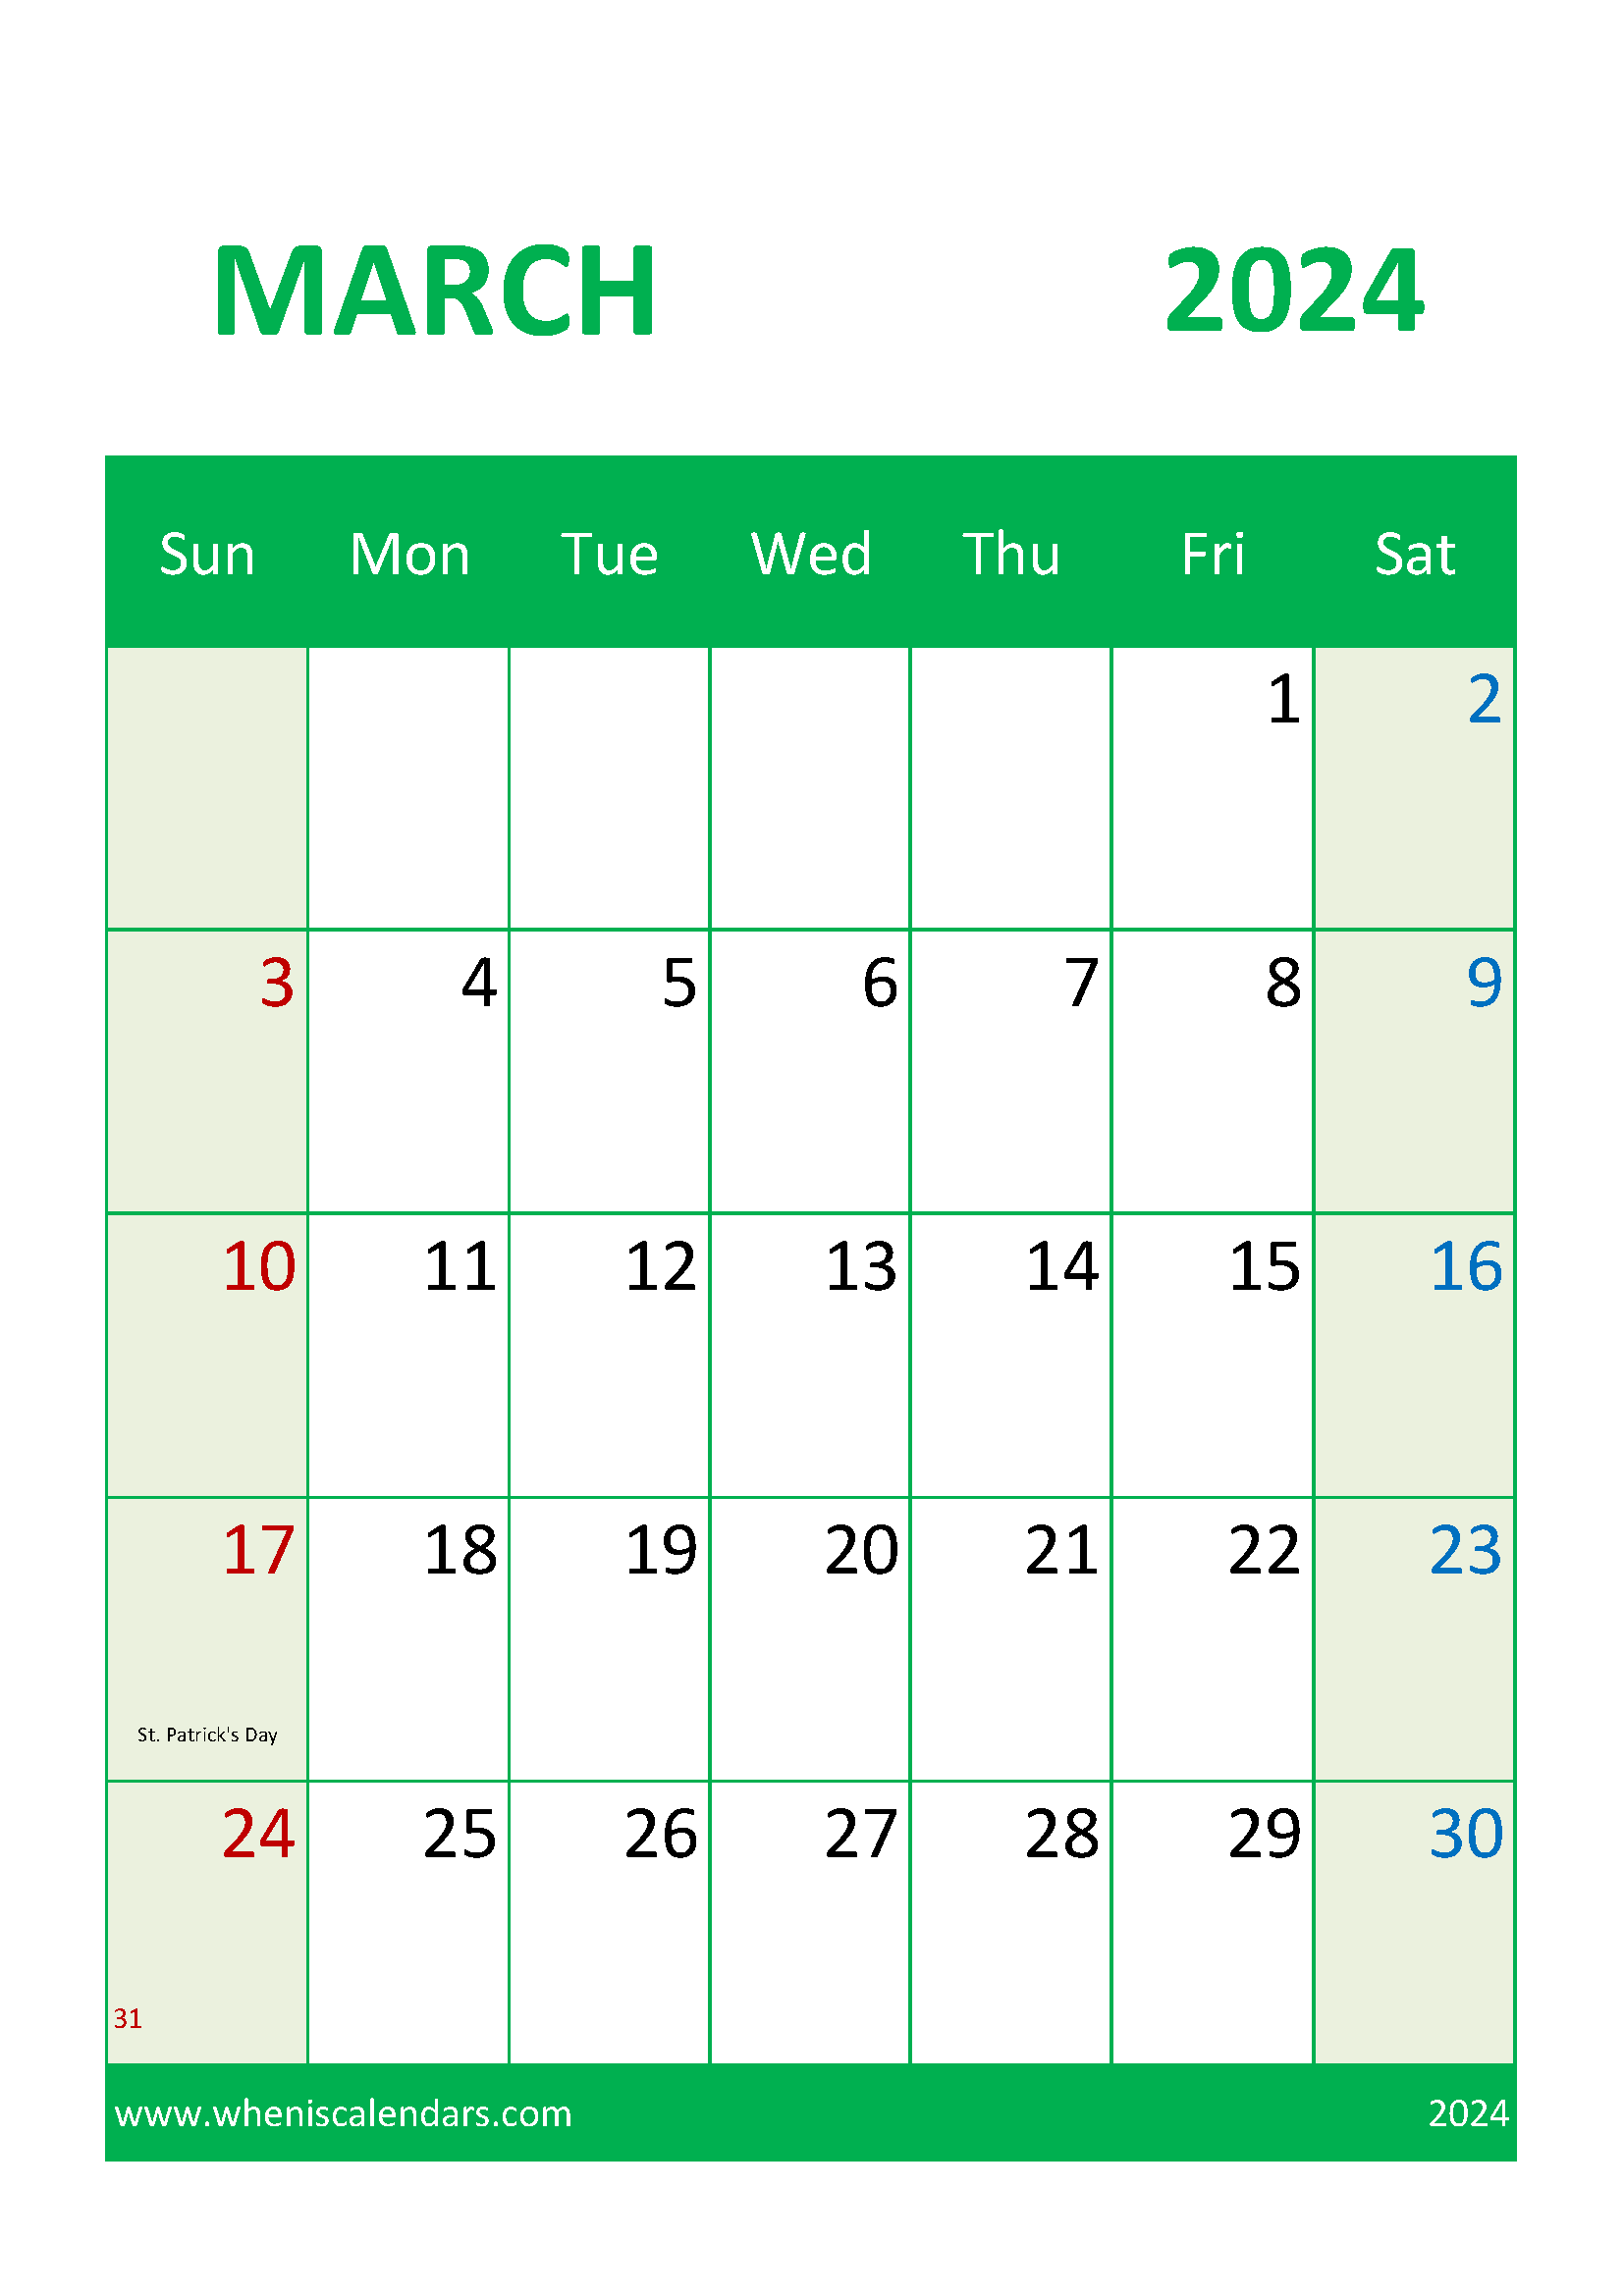 Print Calendar 2024 by Month